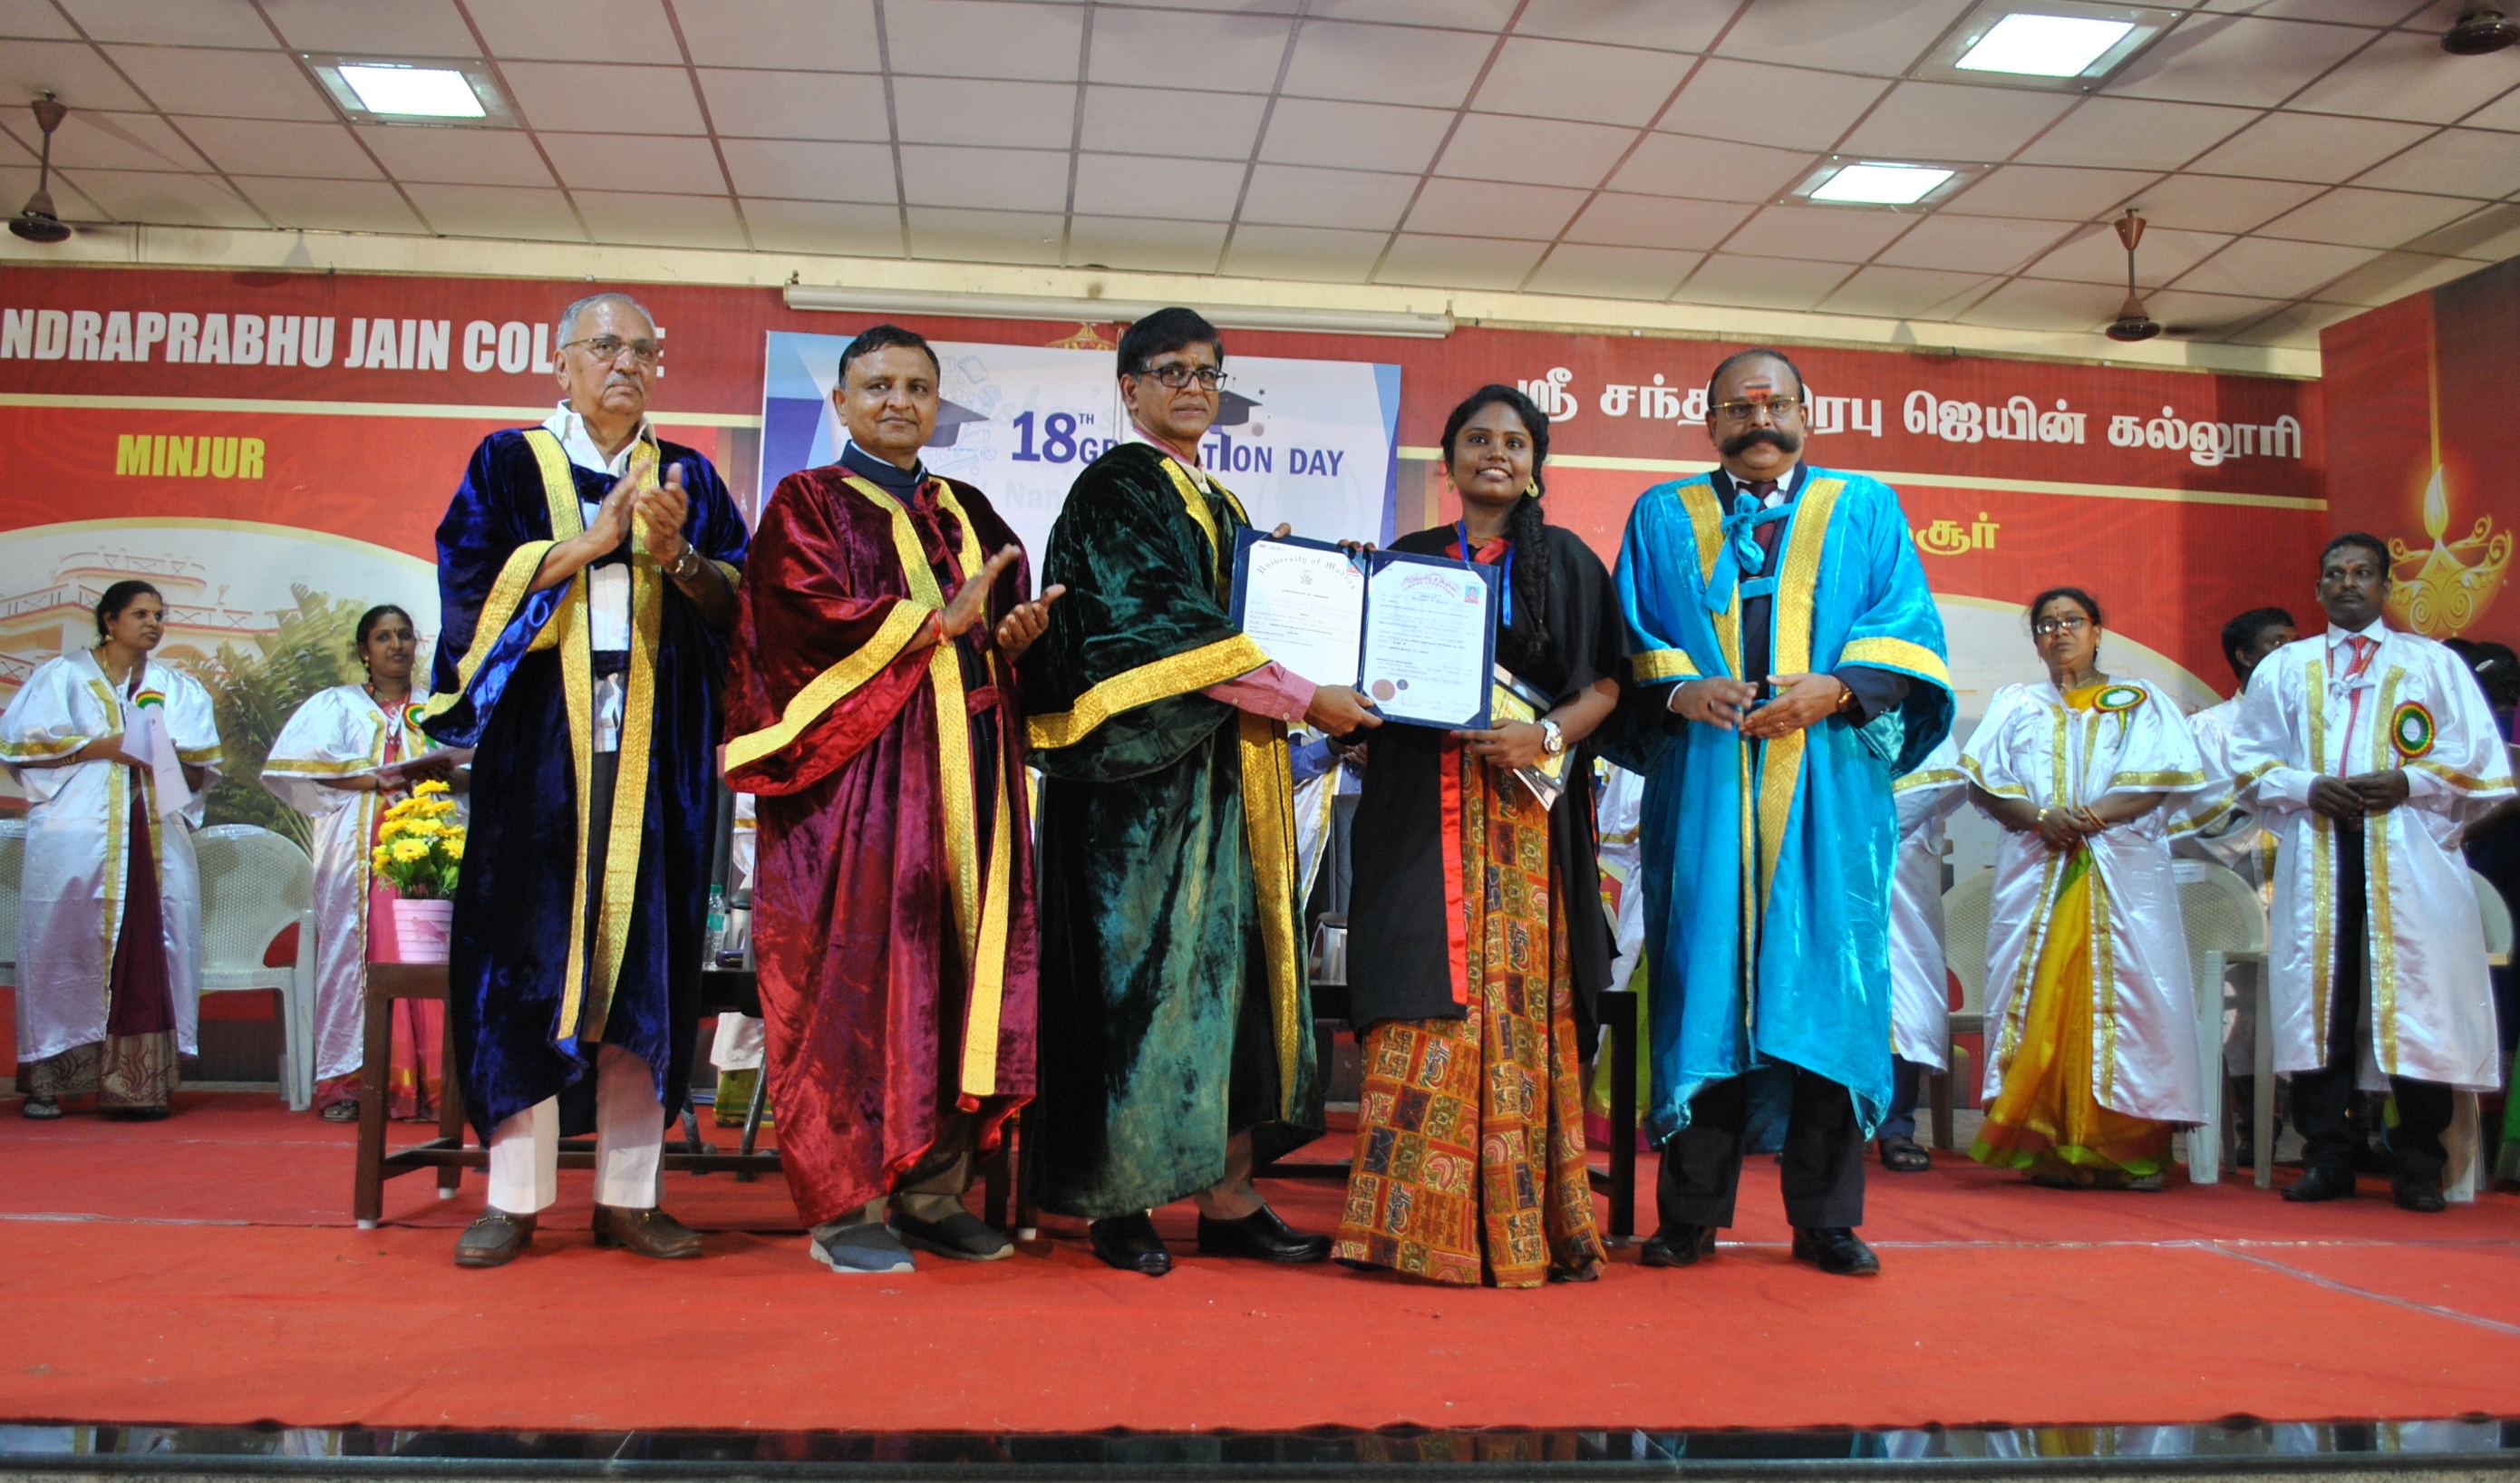 18th Graduation Day of Shri Chandraprabhu Jain College